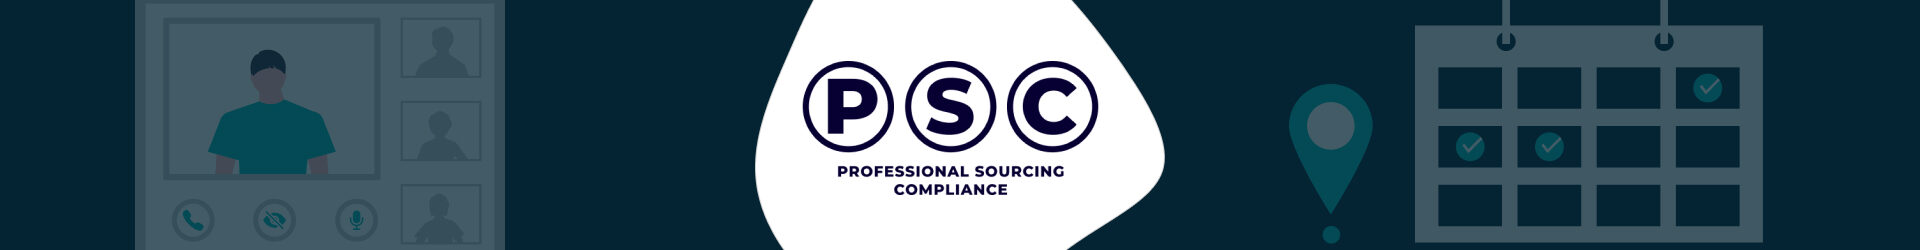 NAPSA Partner: Professional Sourcing Compliance (PSC) Training